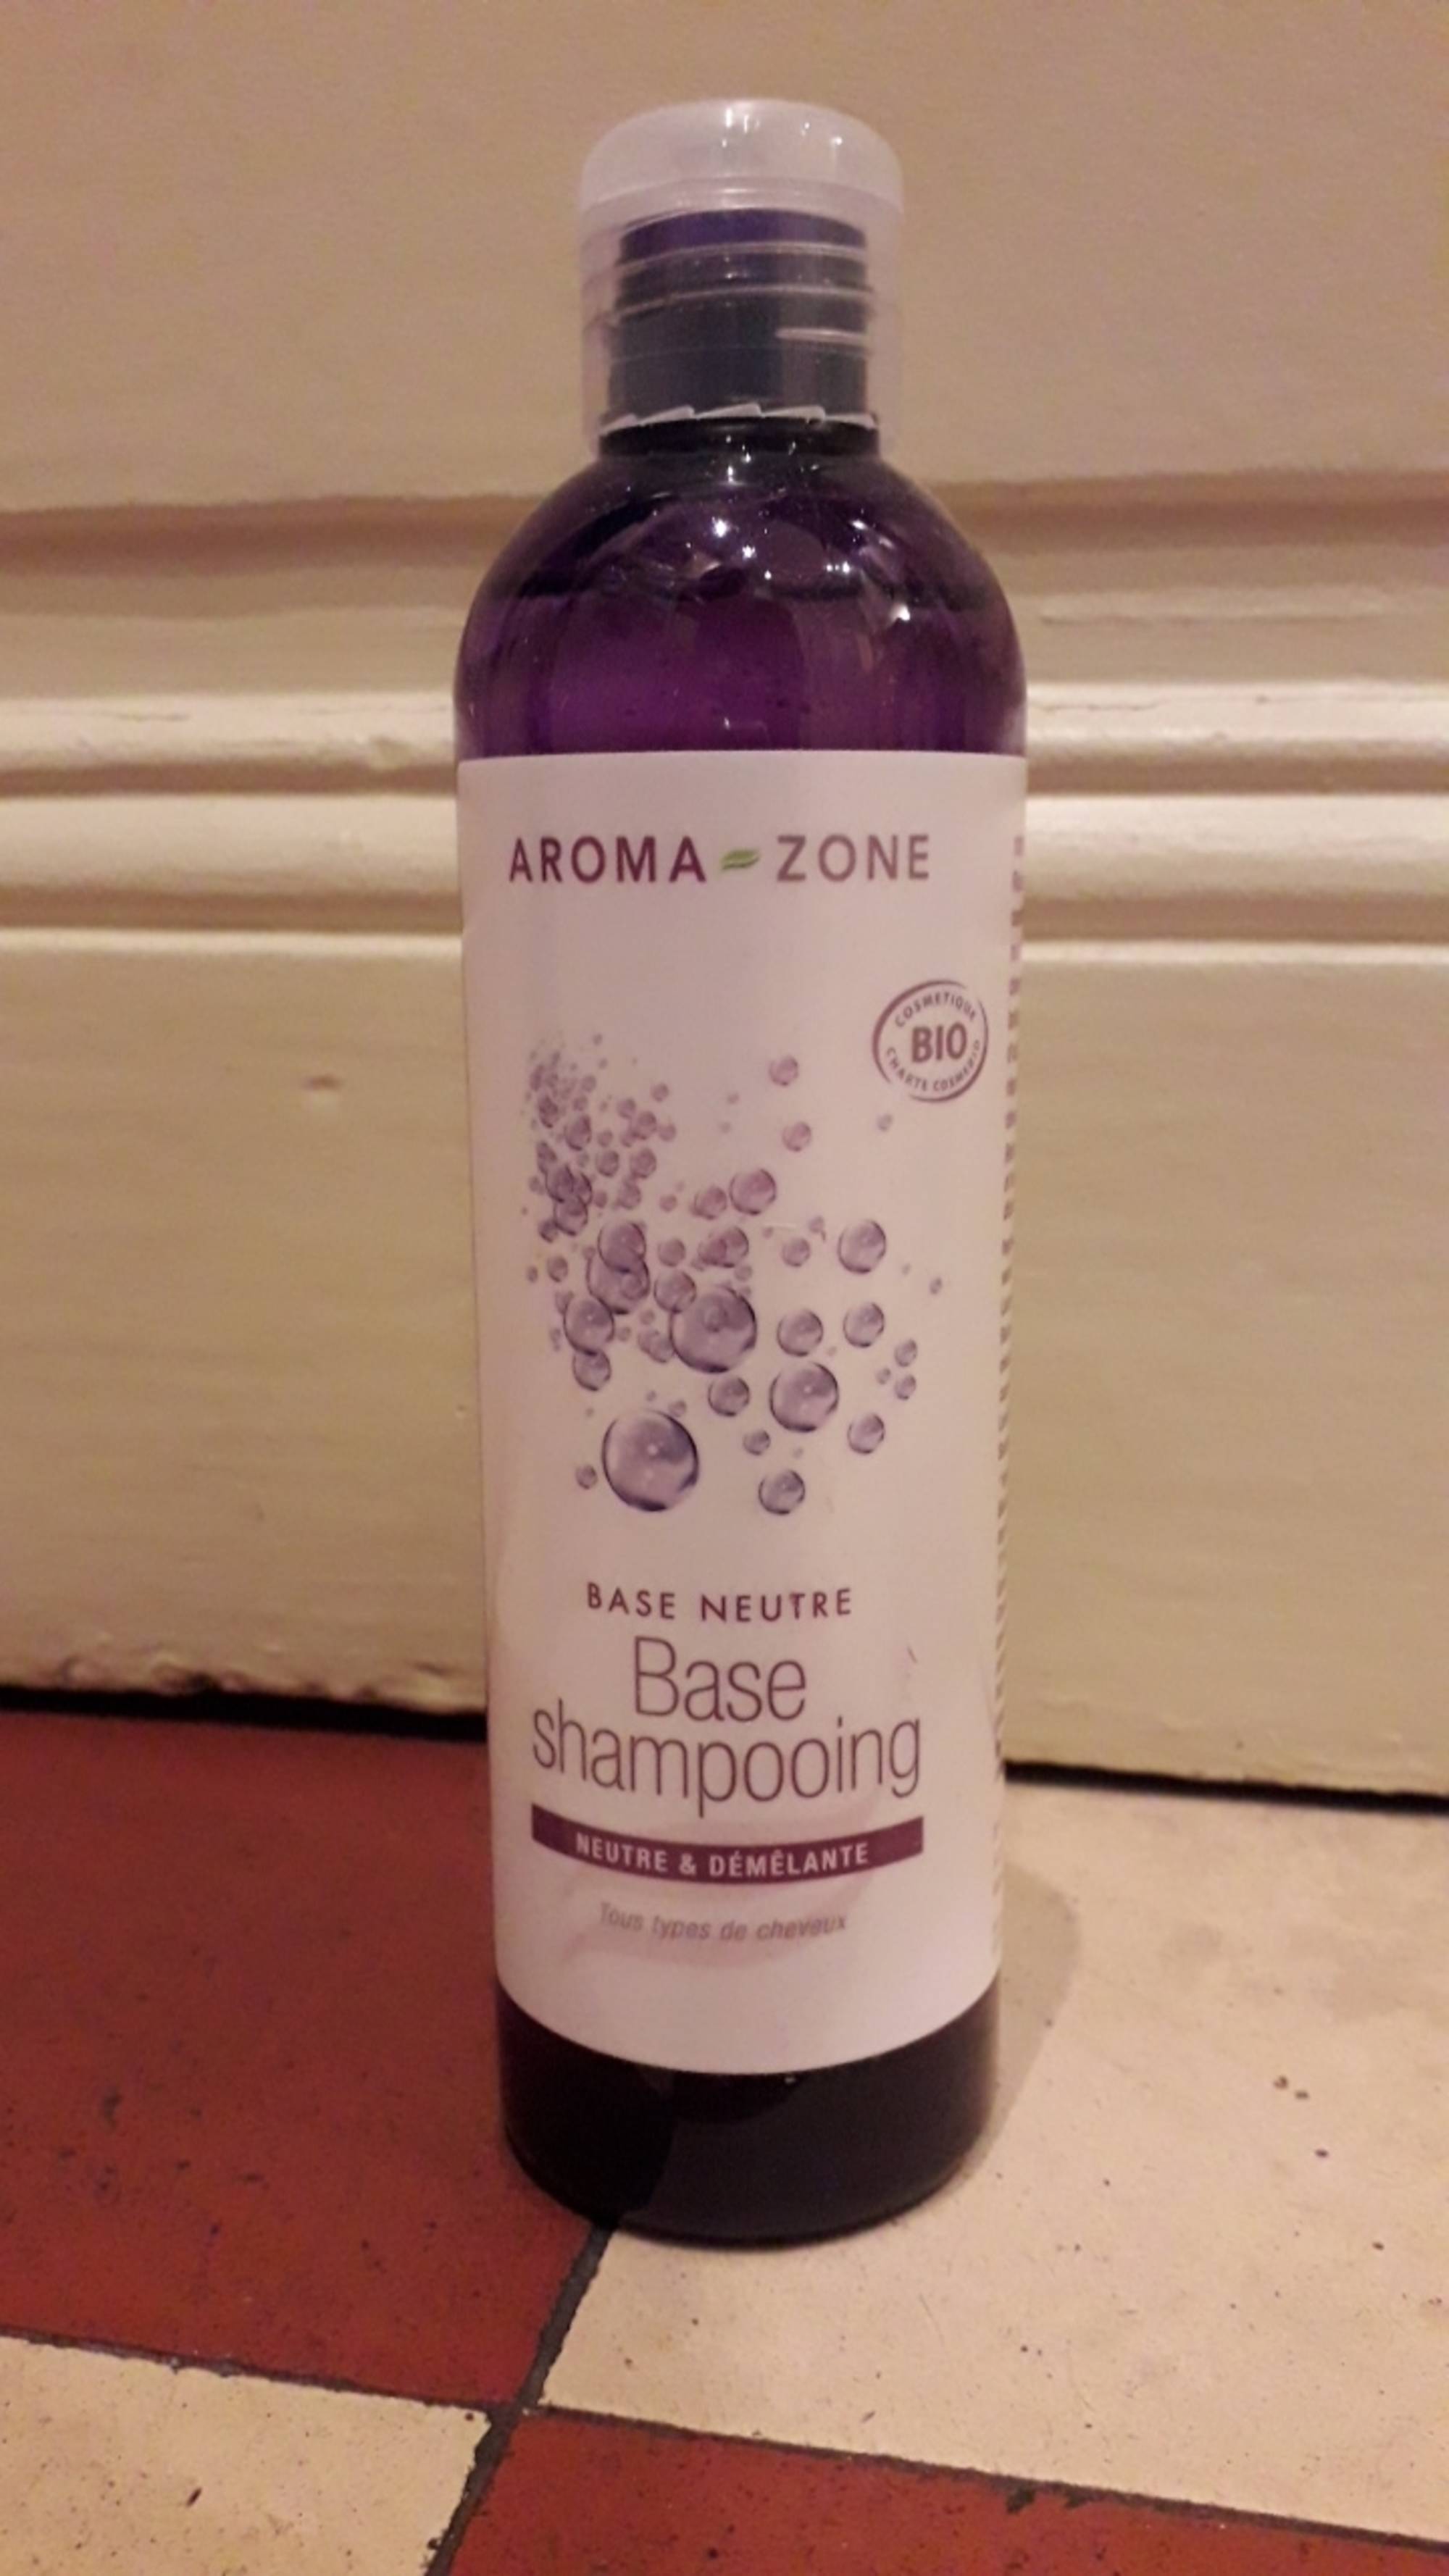 AROMA-ZONE - Base shampooing neutre bio